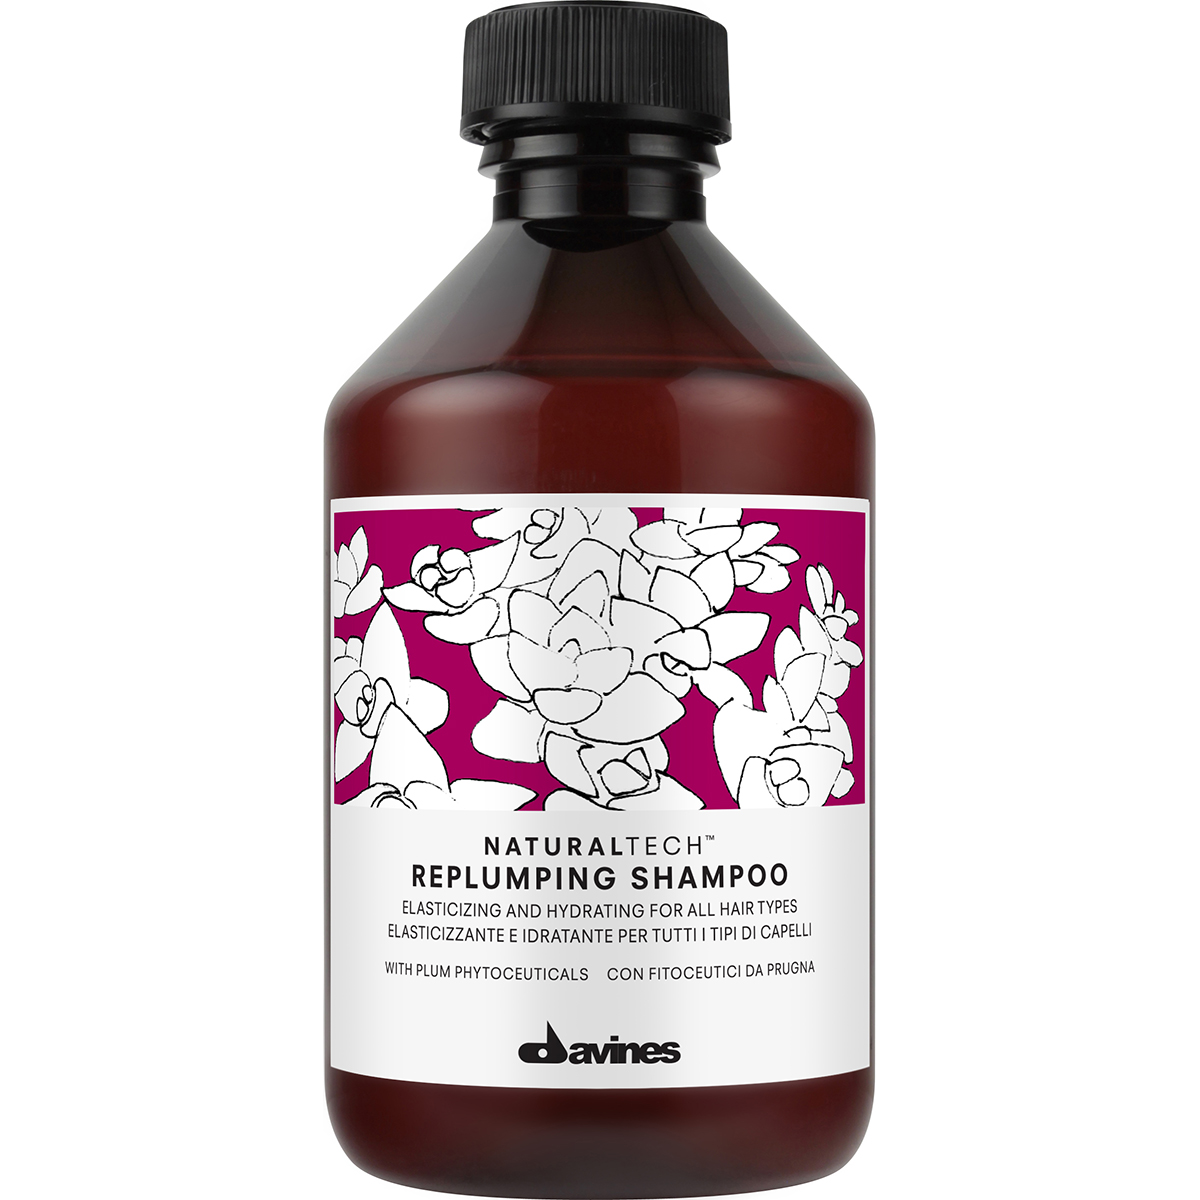 NaturalTech Replumping Shampoo, 250 ml Davines Shampoo